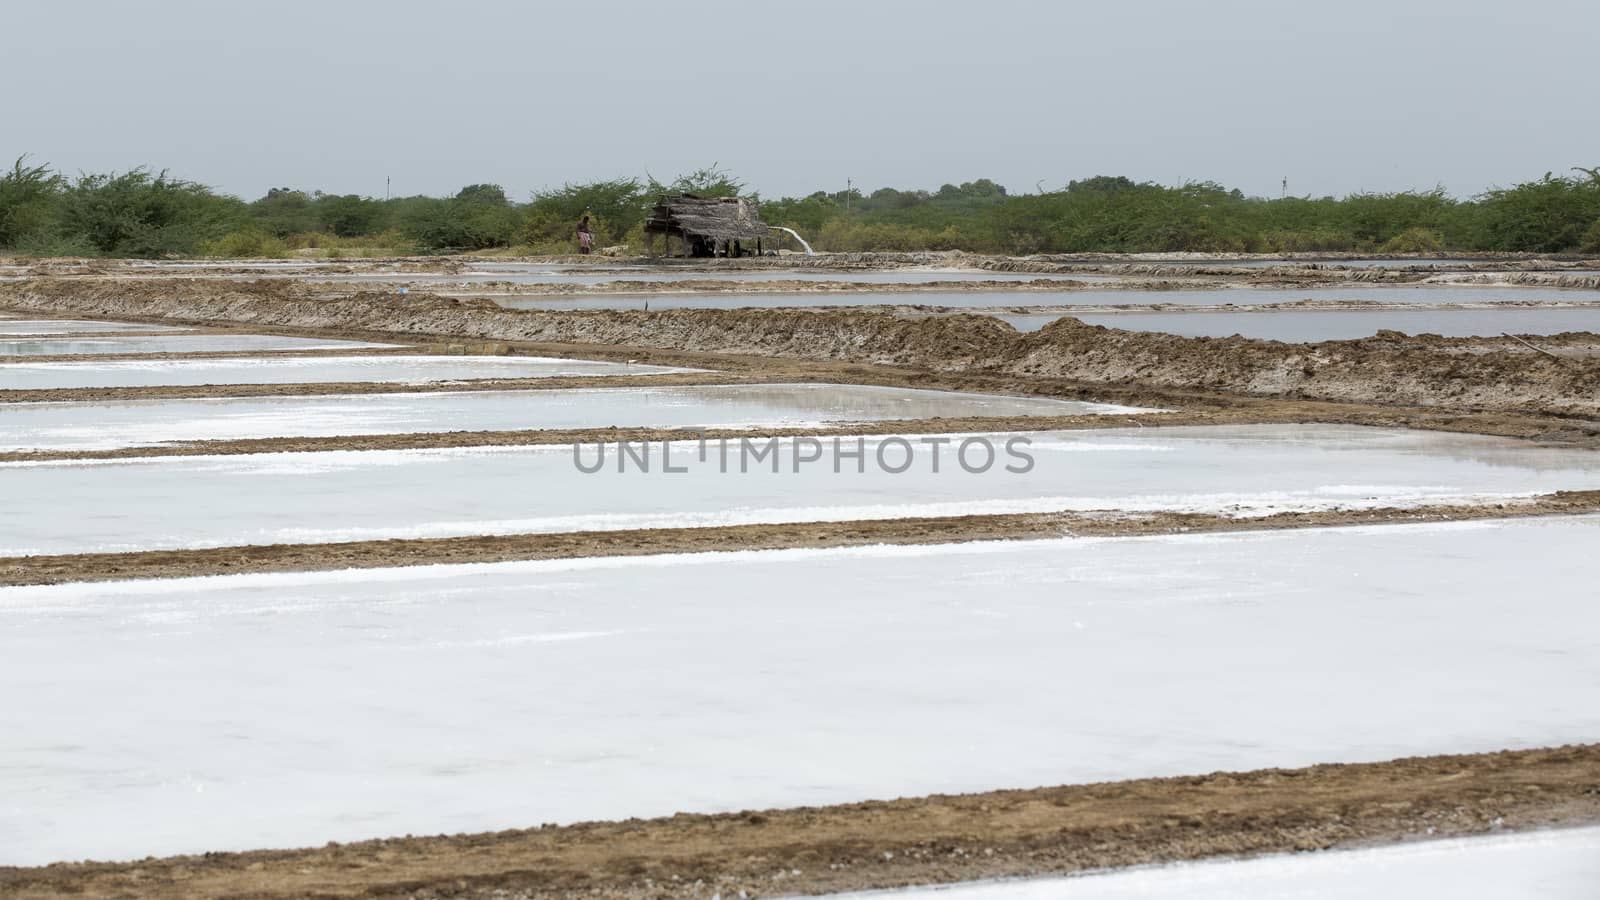 Agricultur wokers in salt field, India Tamil Nadu Pondicherry aera.